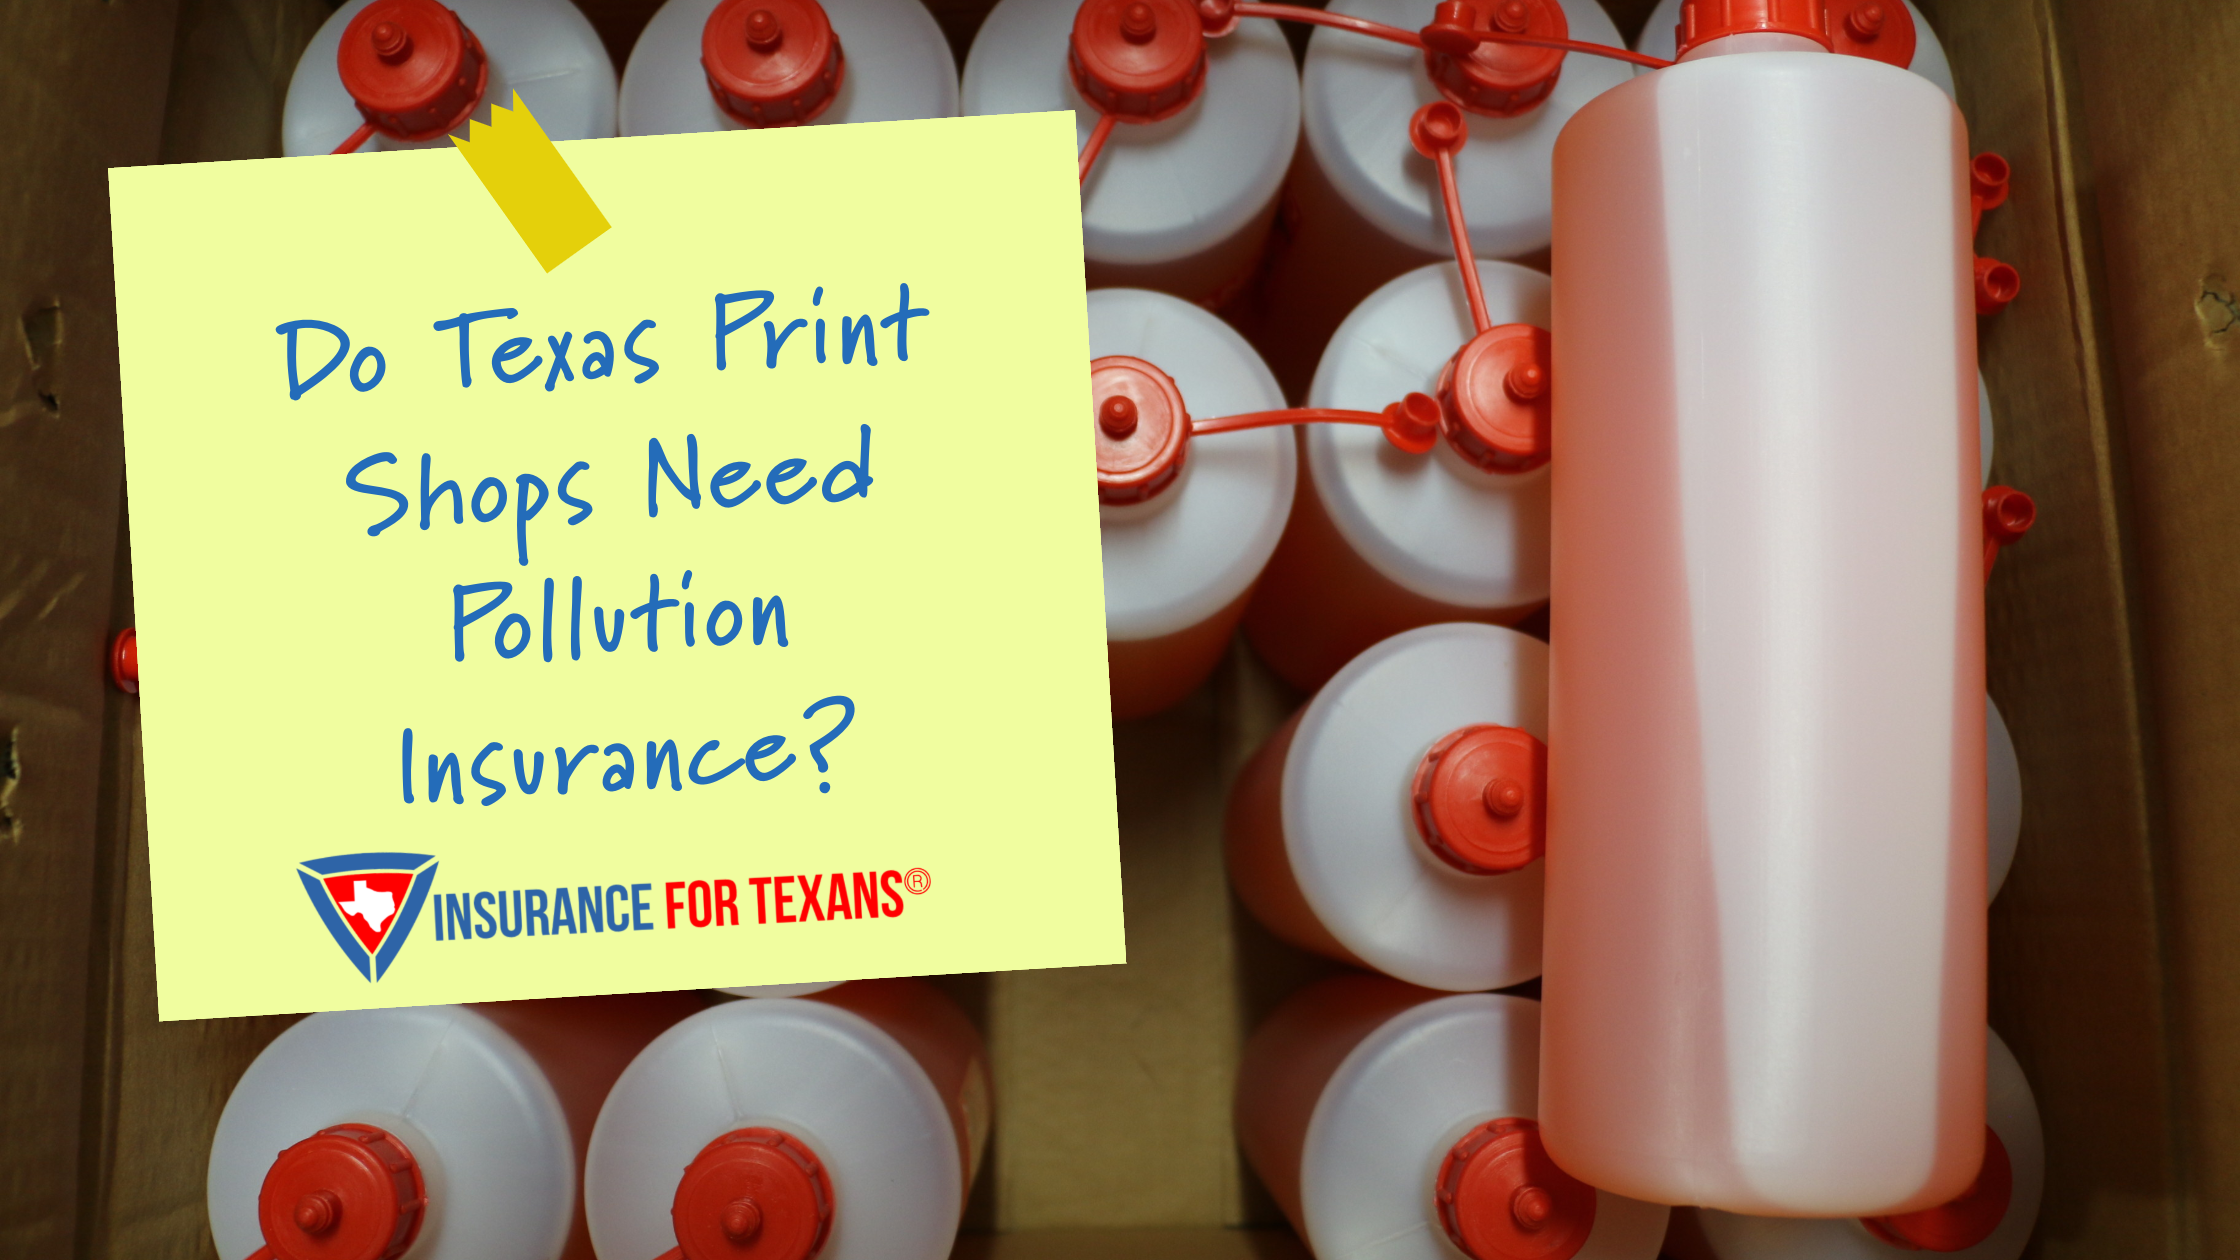 Do Texas Print Shops Need Pollution Insurance?